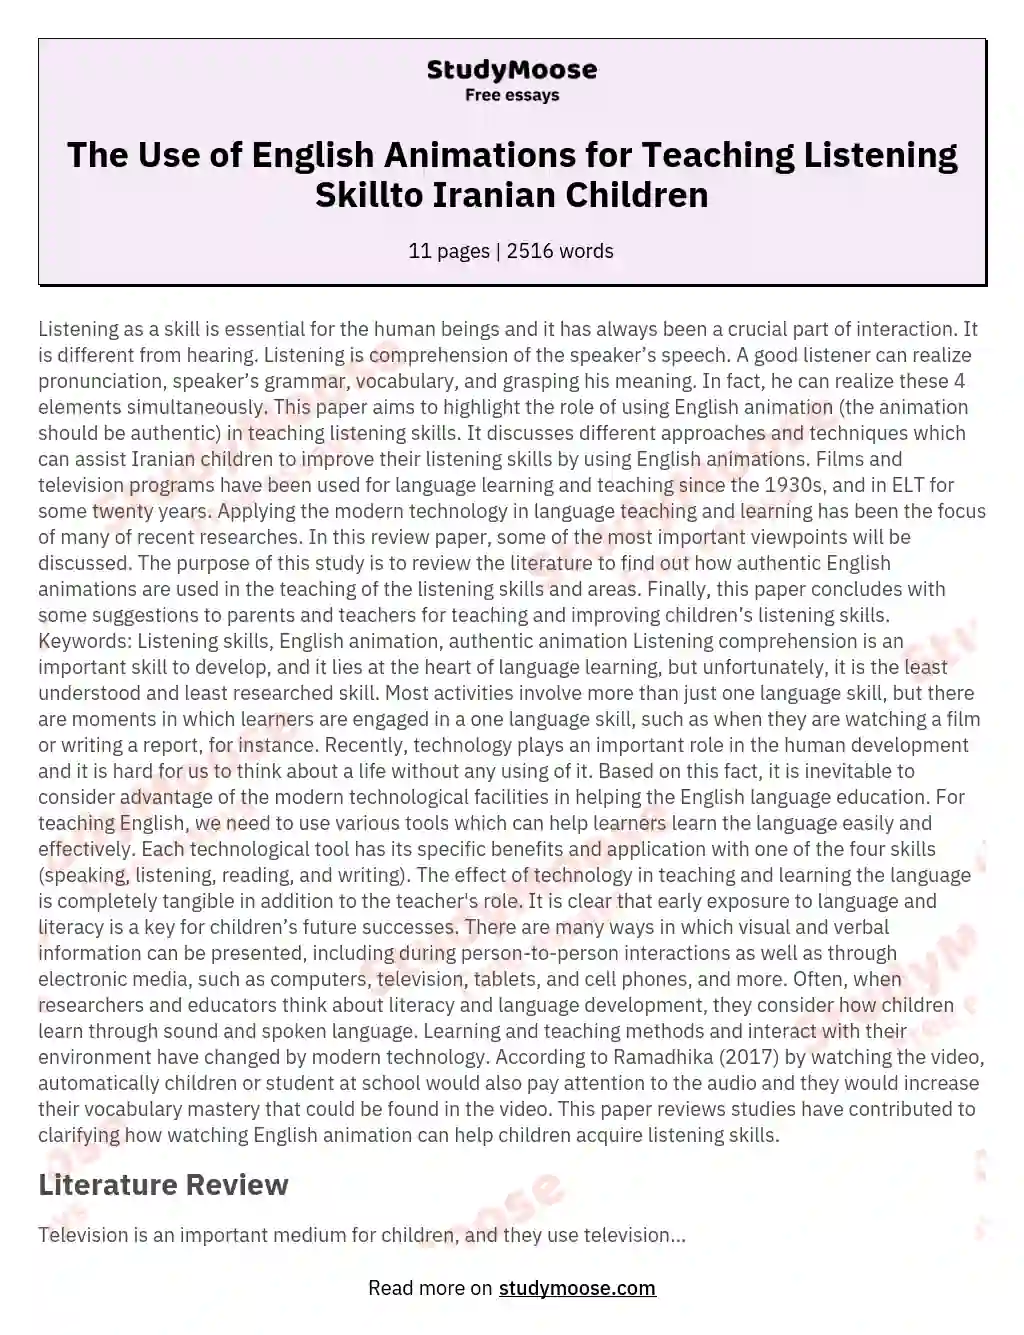 The Use of English Animations for Teaching Listening Skillto Iranian Children essay